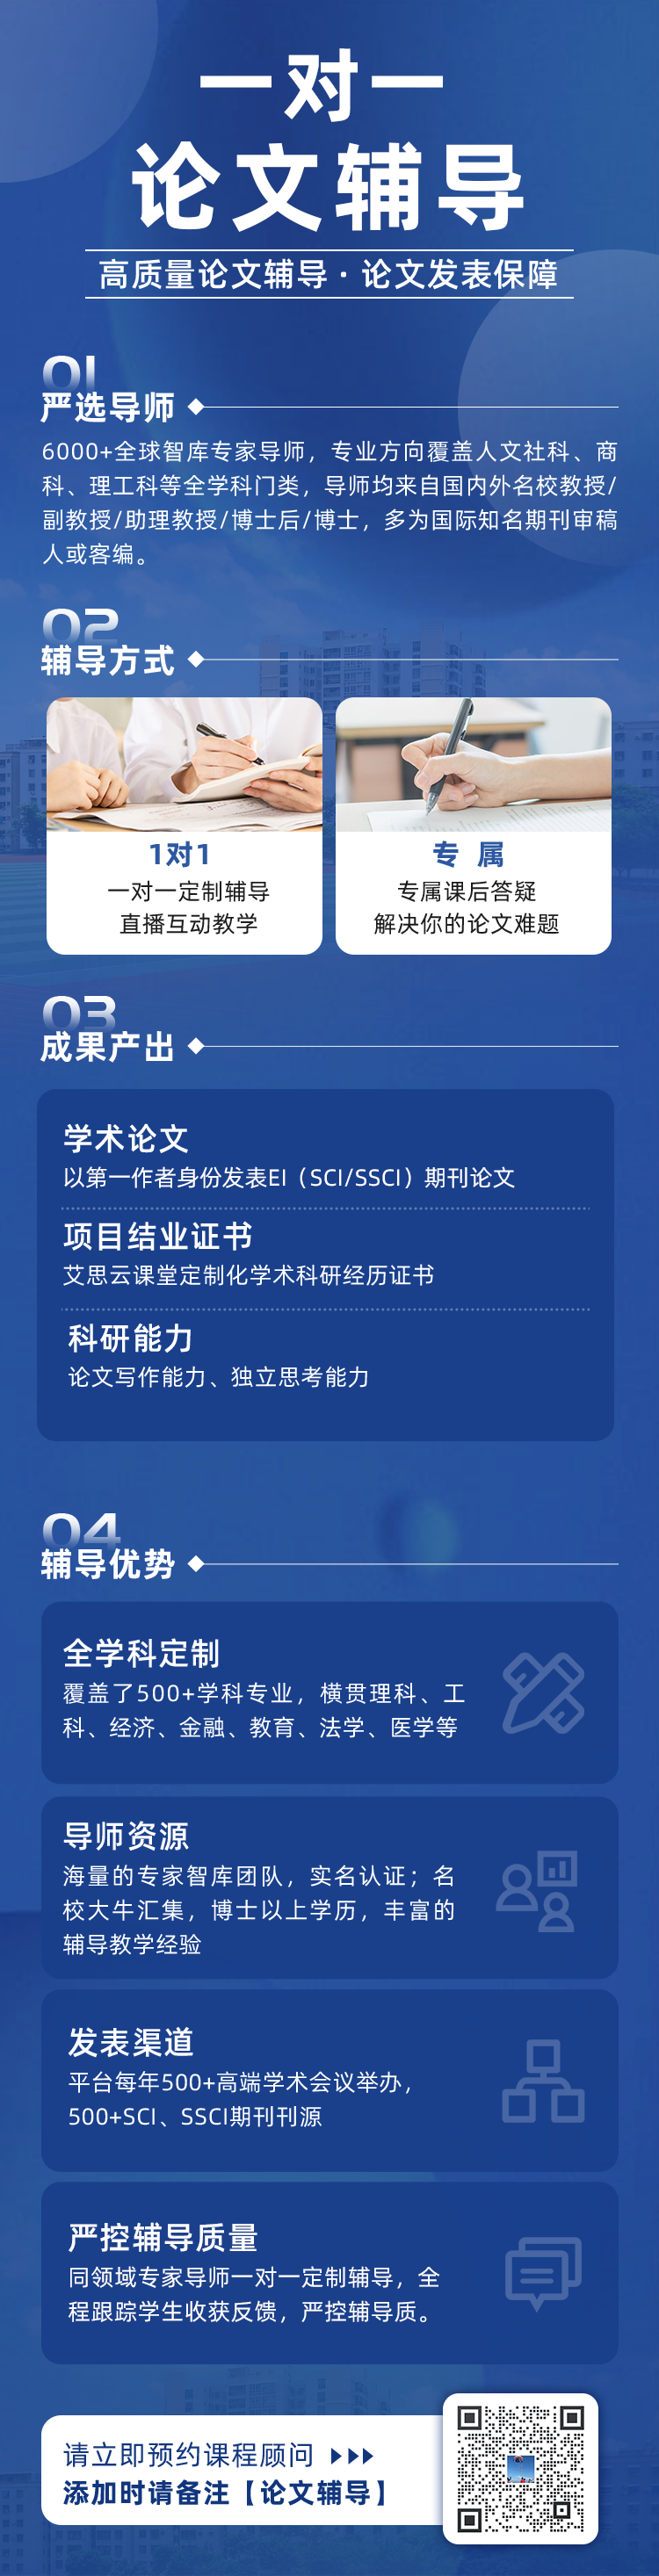 SCI-SSCI-A&HCI论文-详情页-陈嘉妍-20220830-1.png